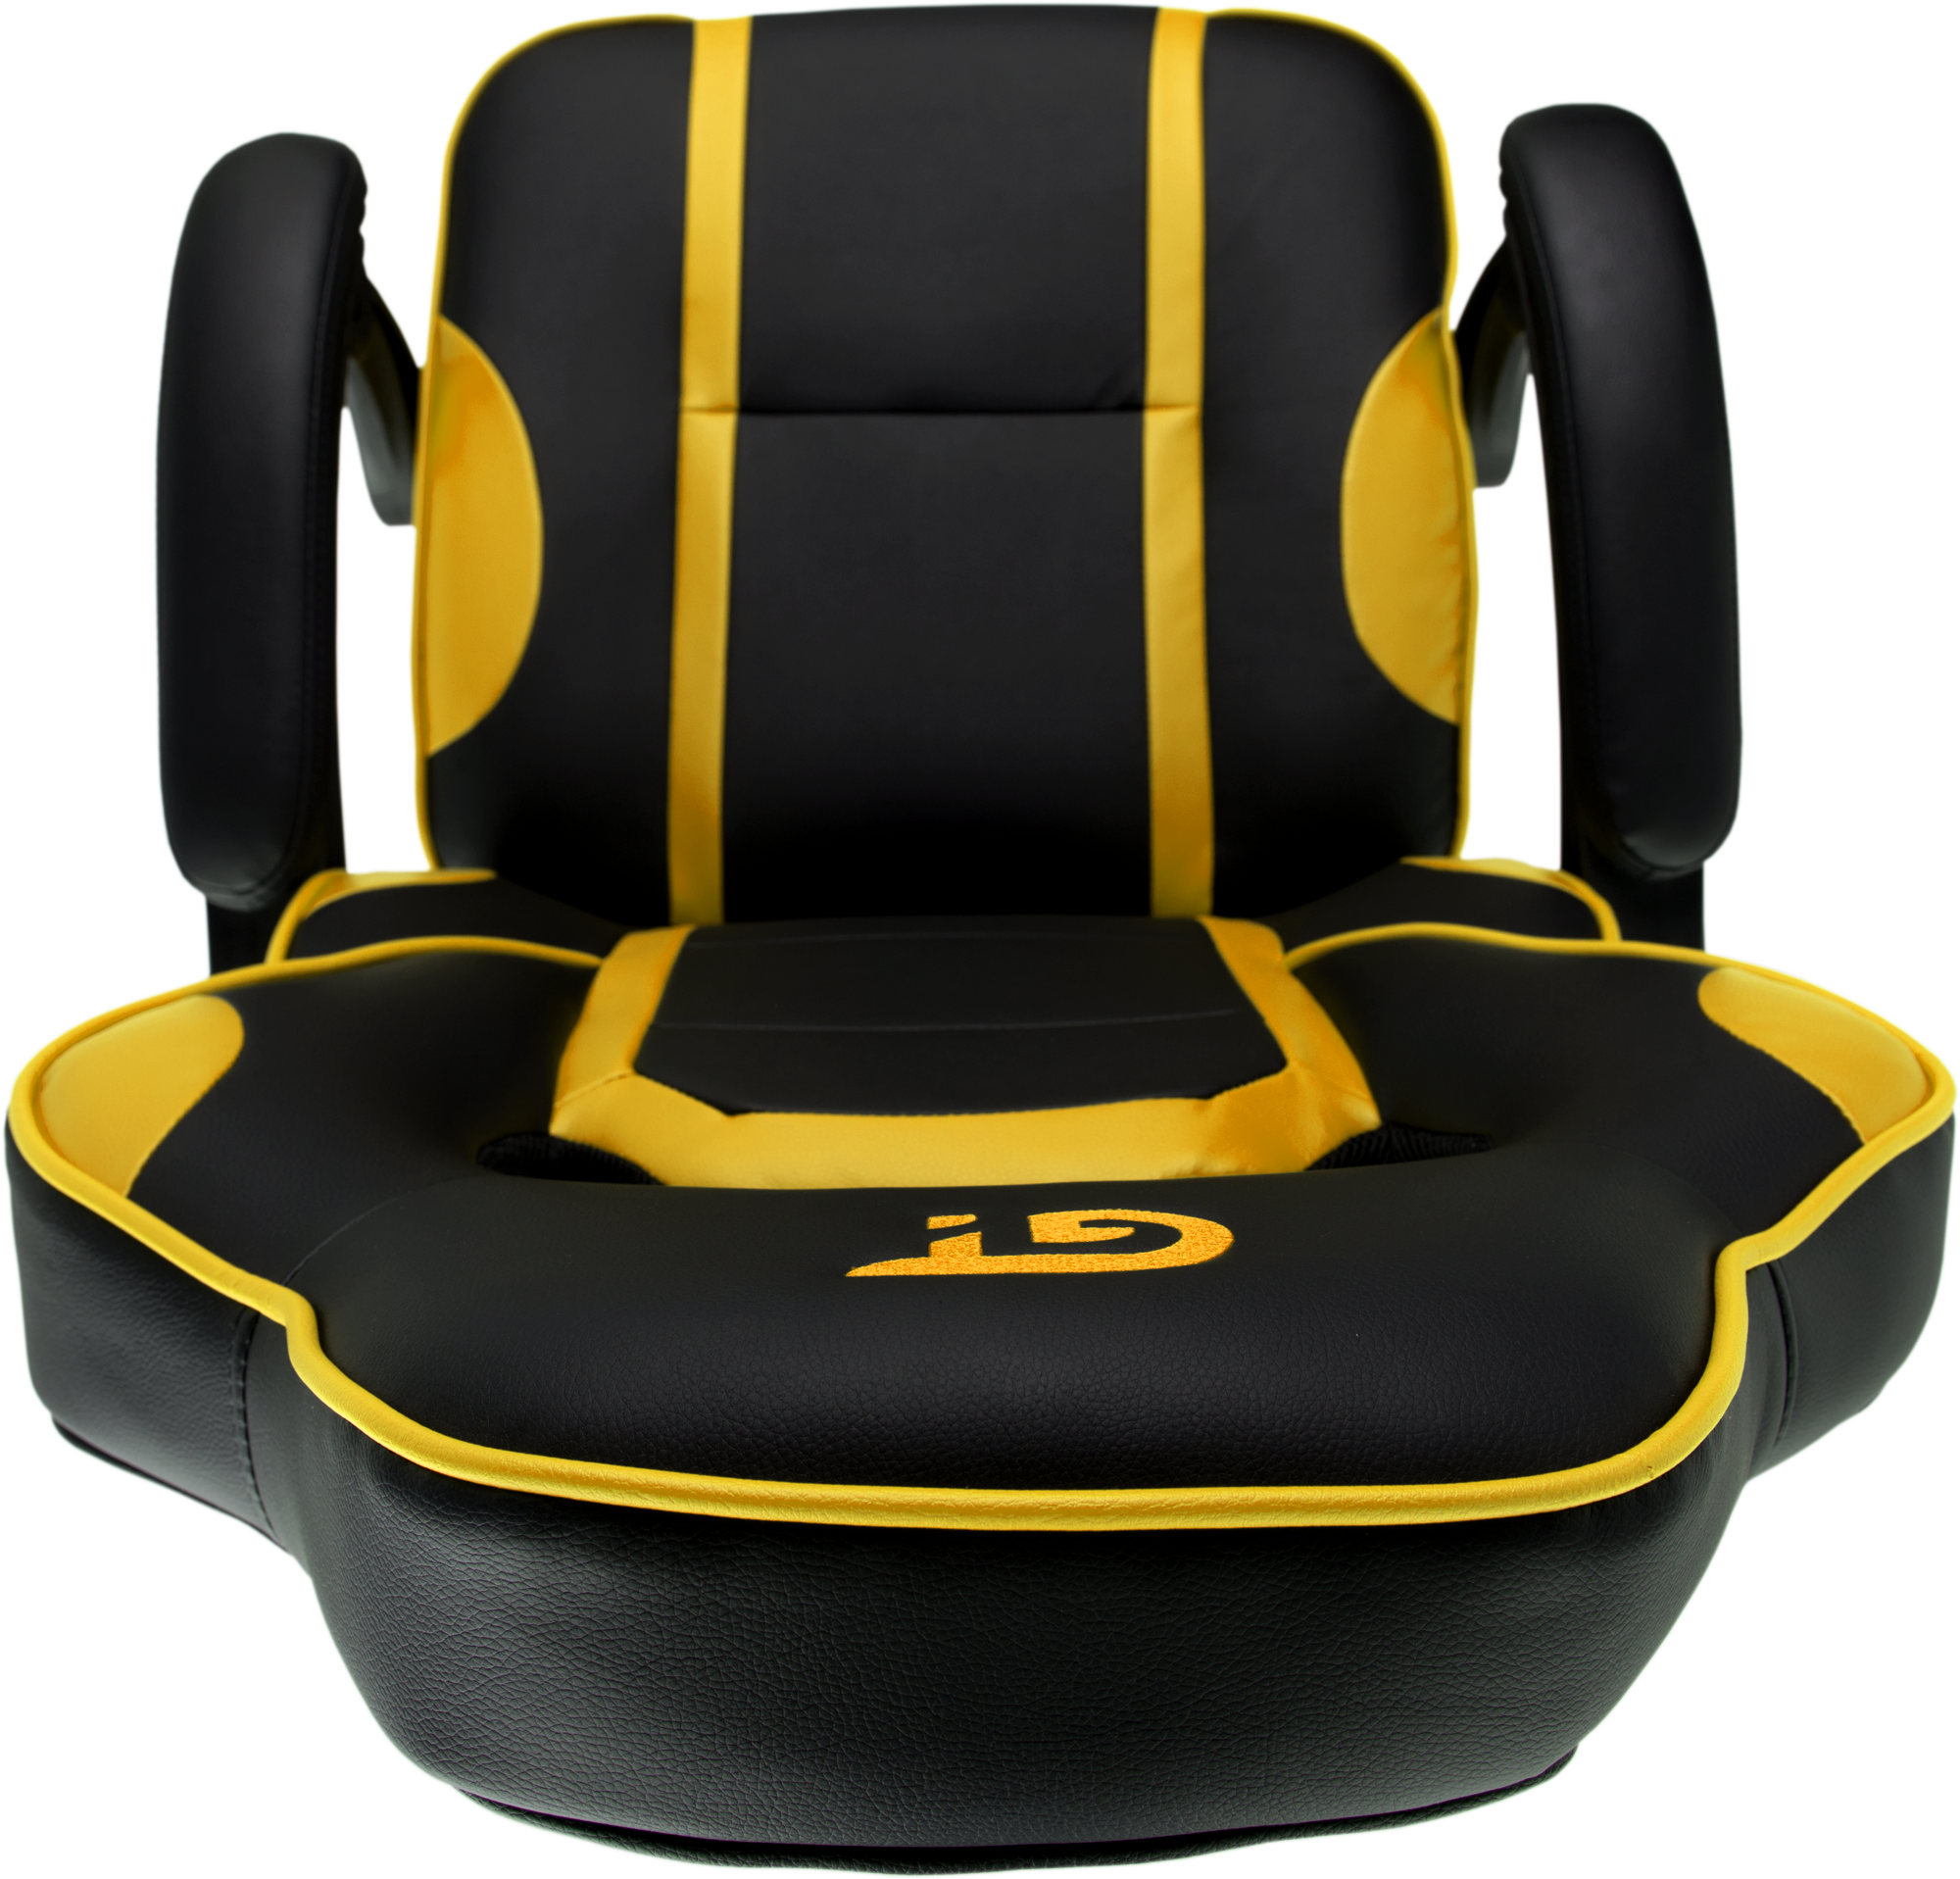 Геймерське крісло GT Racer чорне з жовтим (X-2749-1 Black/Yellow) - фото 10